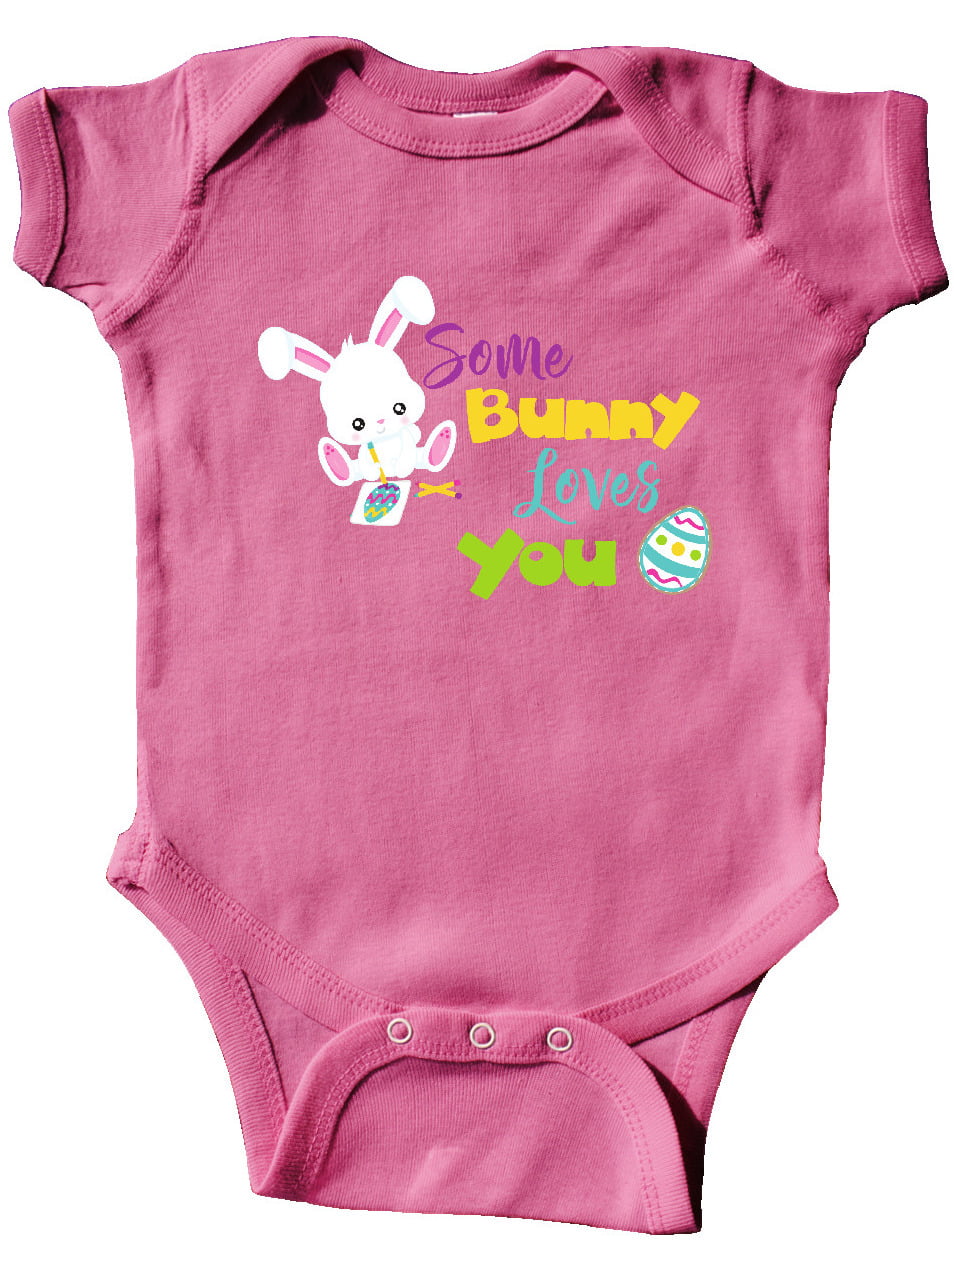 Girl's Easter Bunny Pink Snap Shirt NEW NWT $12 Newborn 3 months bodysuit 